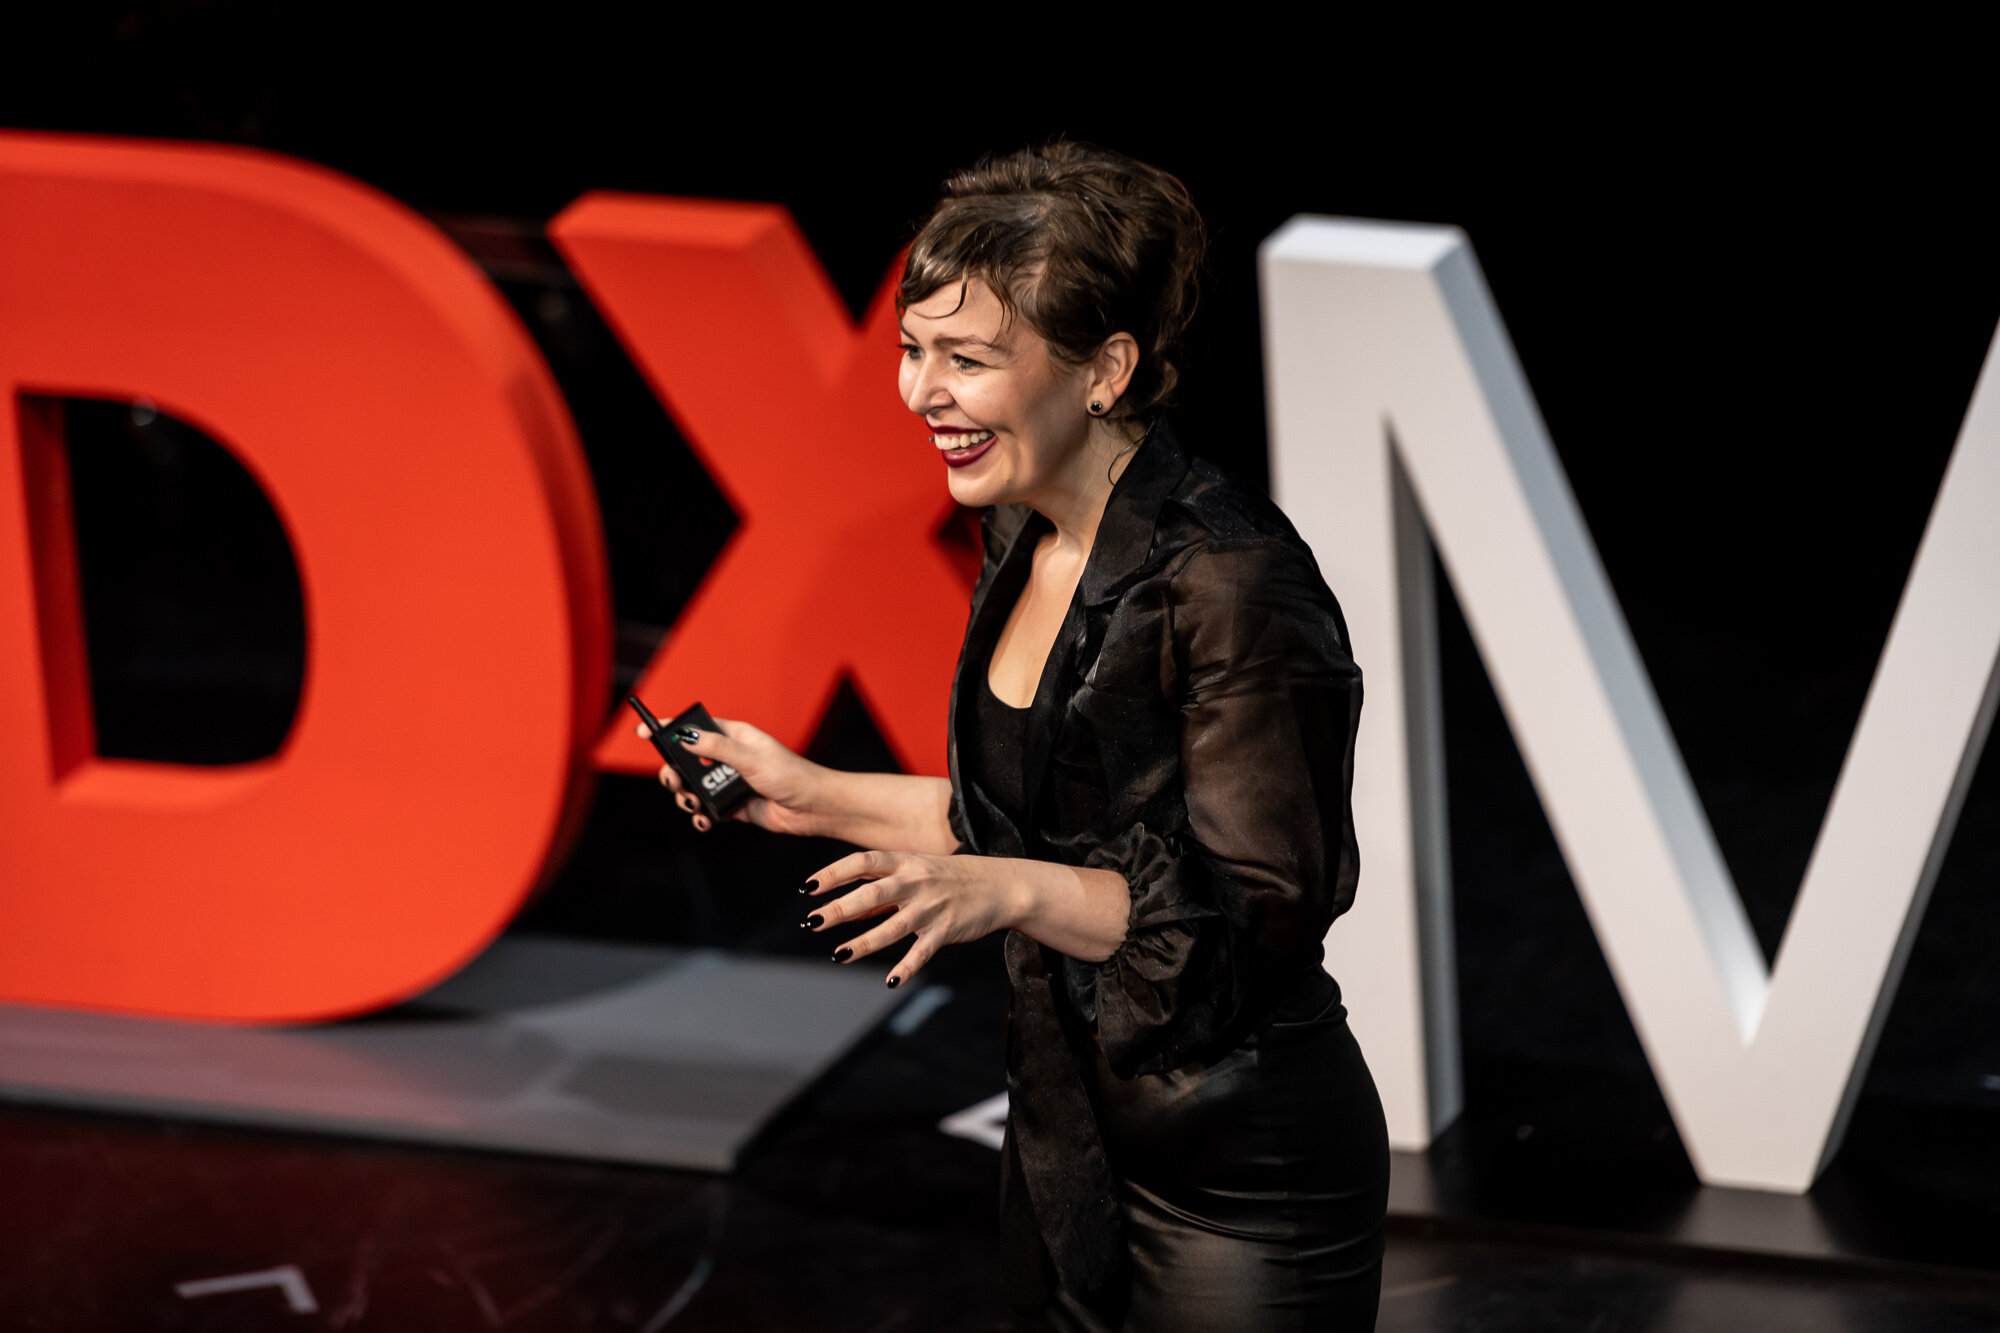 TEDX_2019-191110-129.jpg